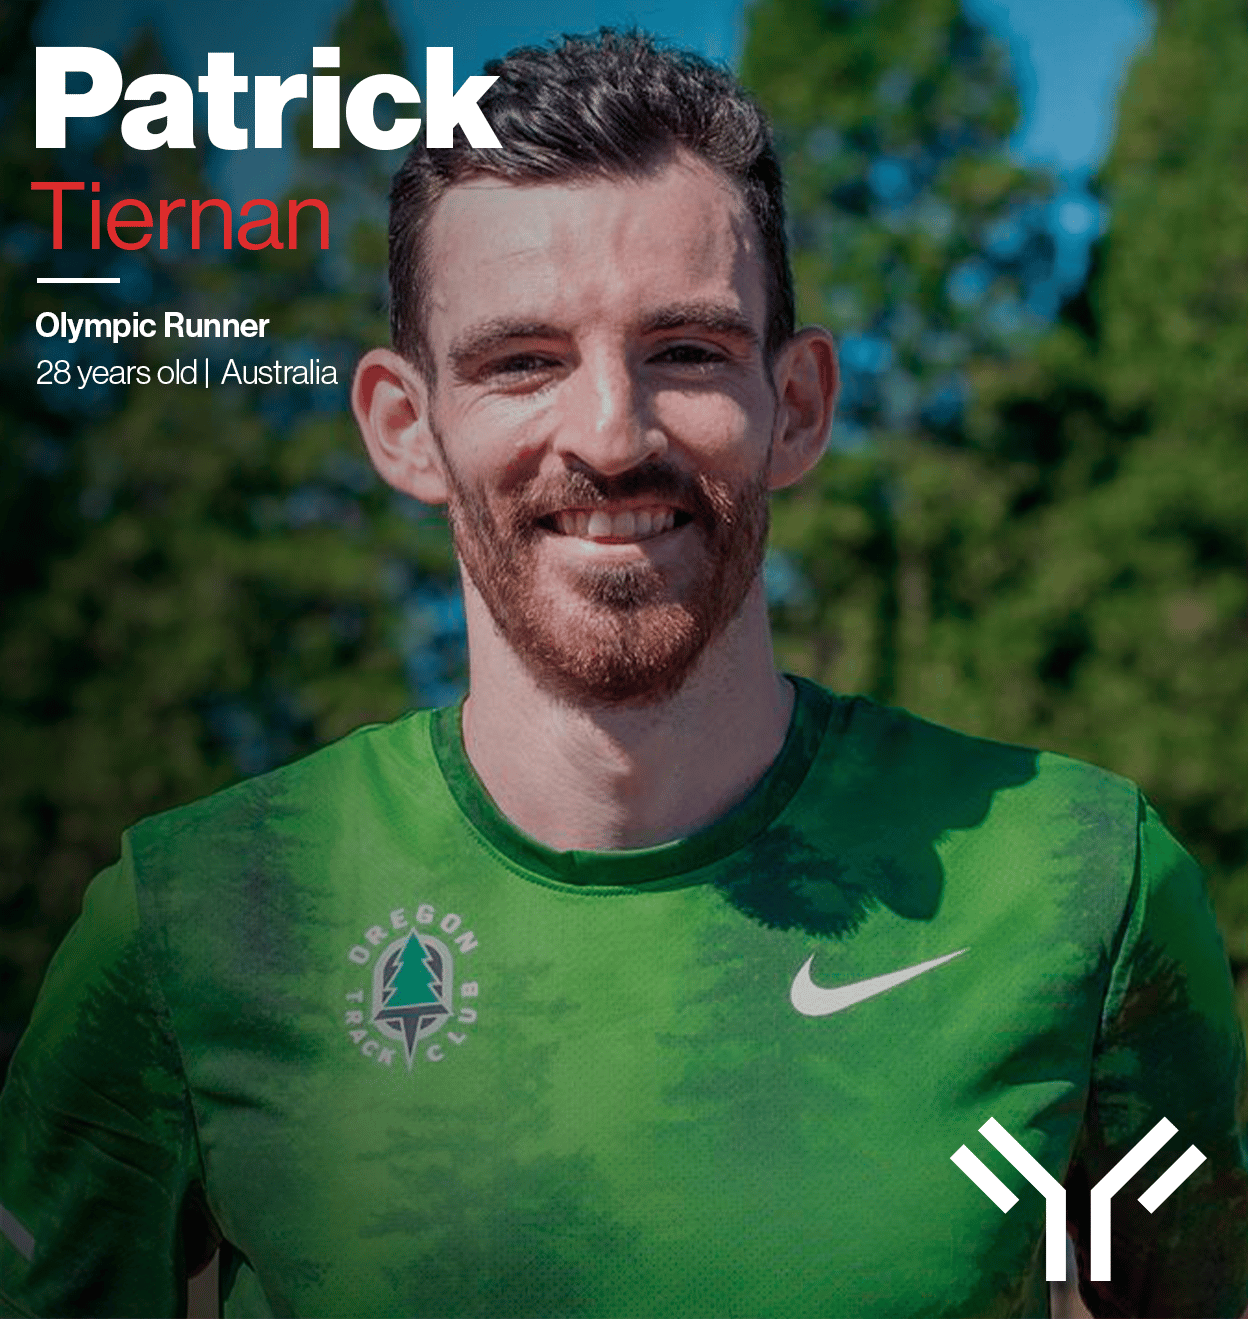 Meet the New Team Sport Athlete of the Month: Patrick Tiernan